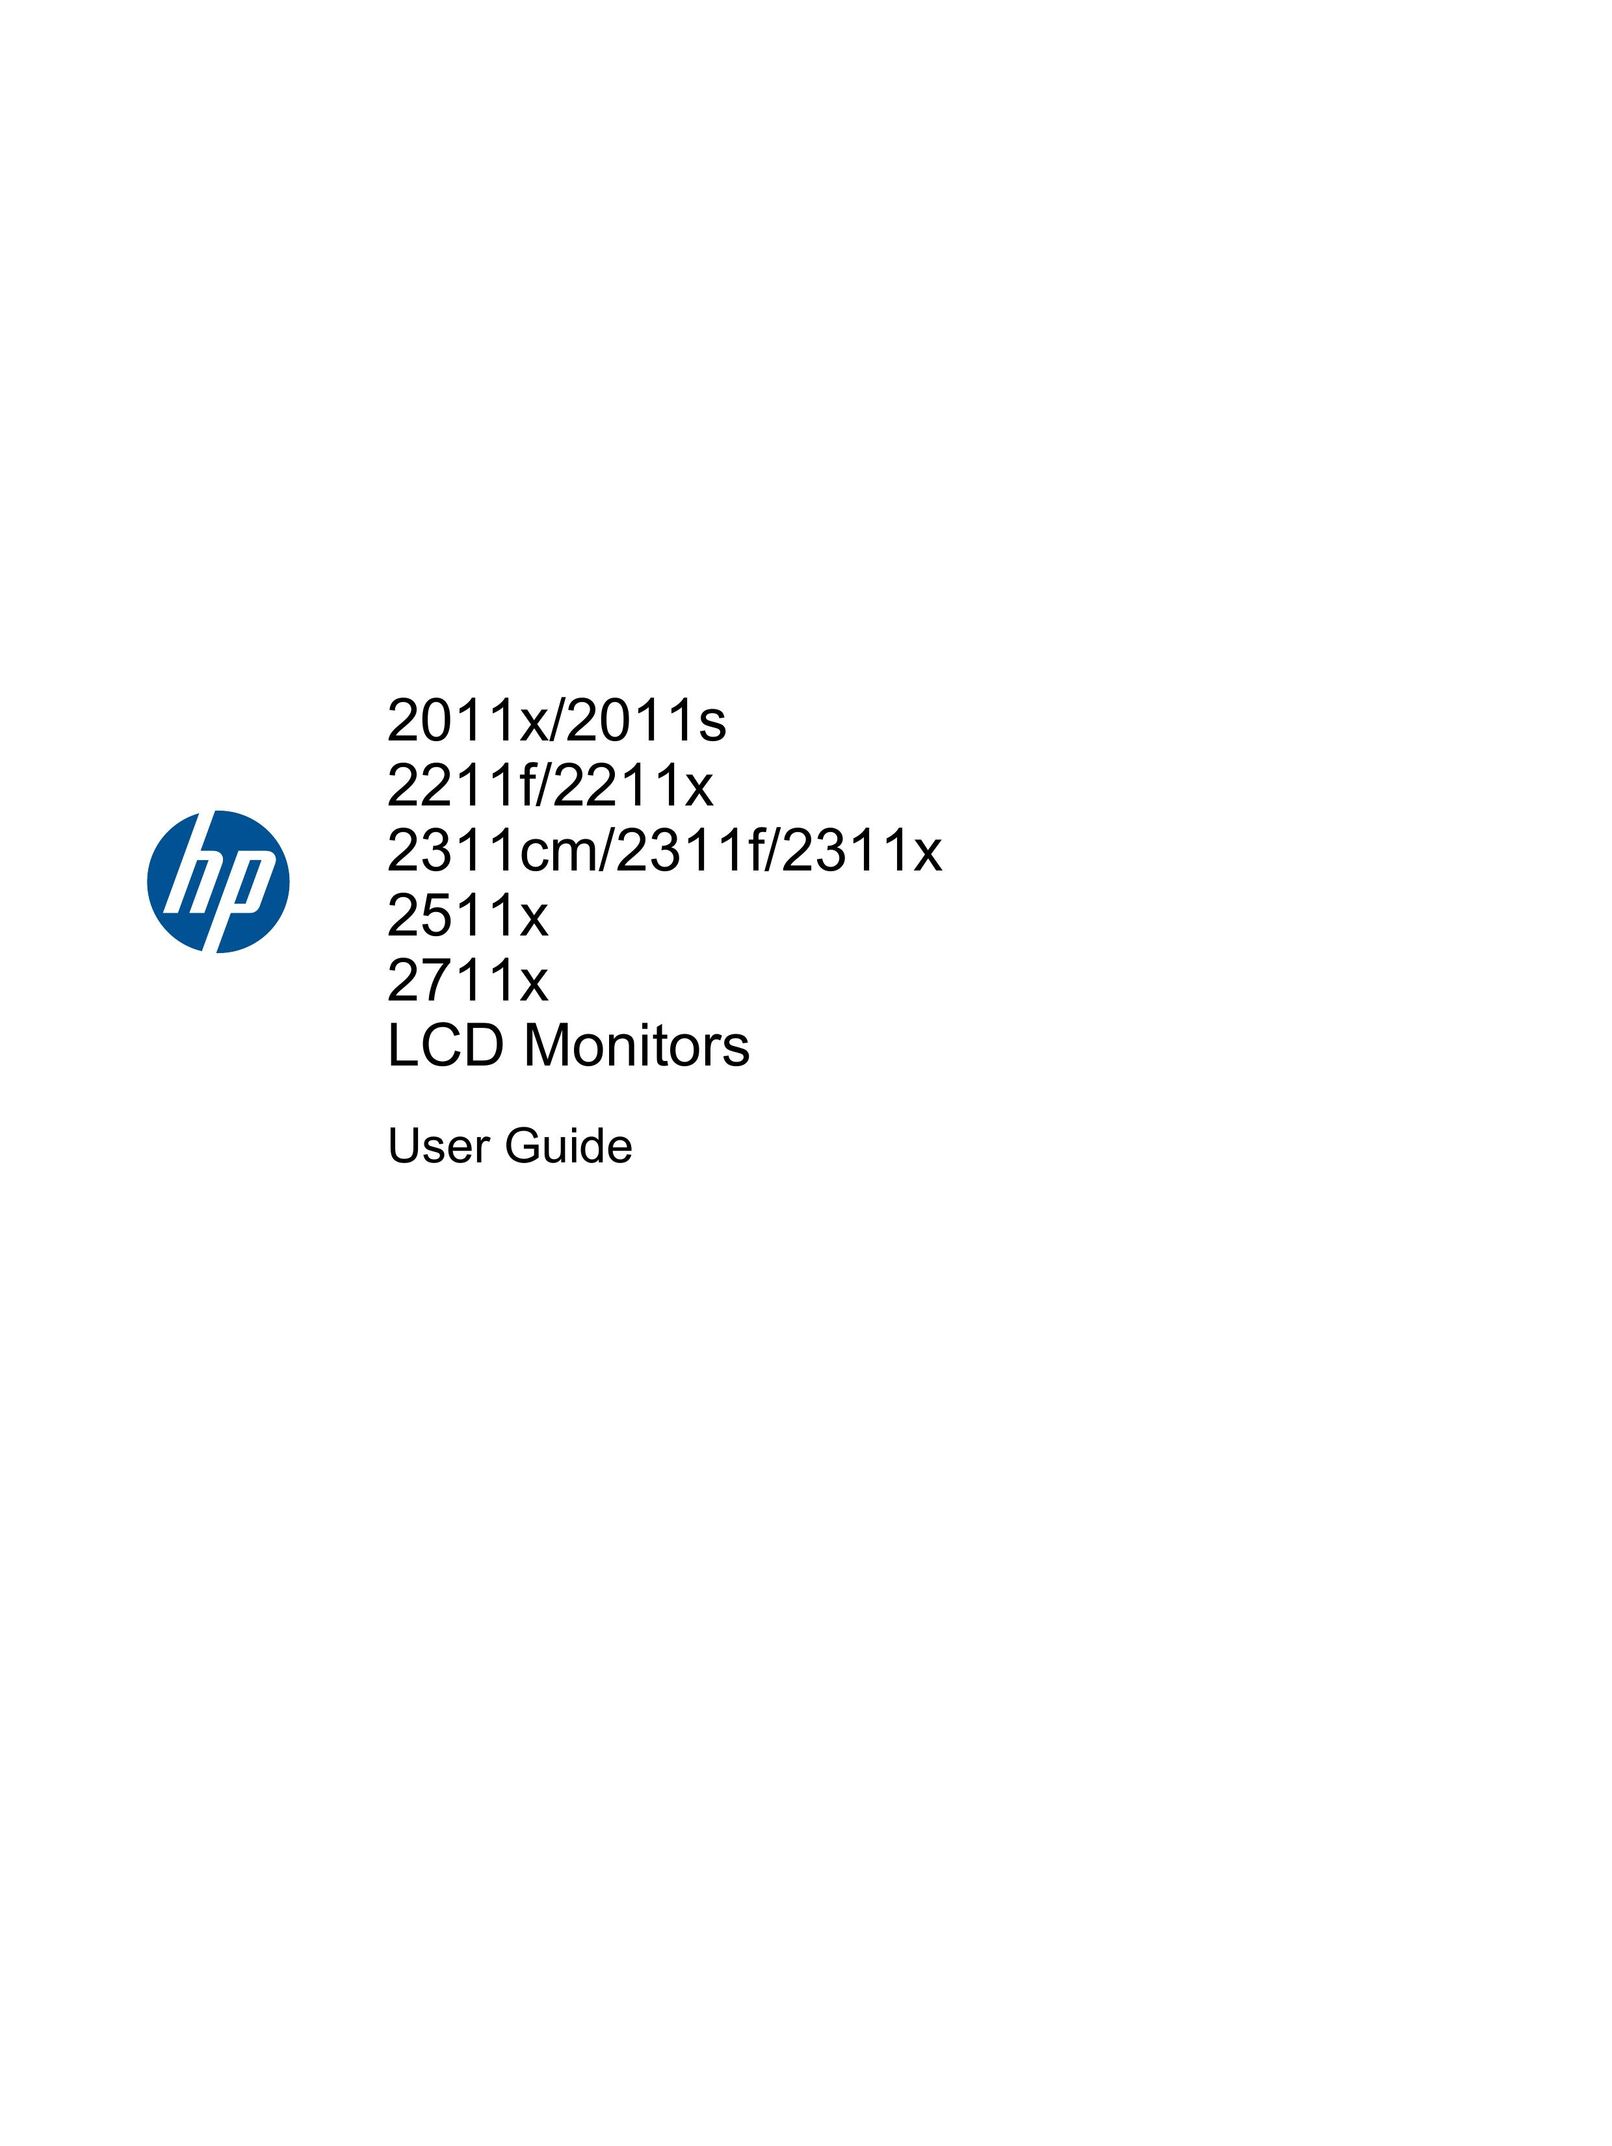 HP (Hewlett-Packard) 2211f/2211x Car Video System User Manual